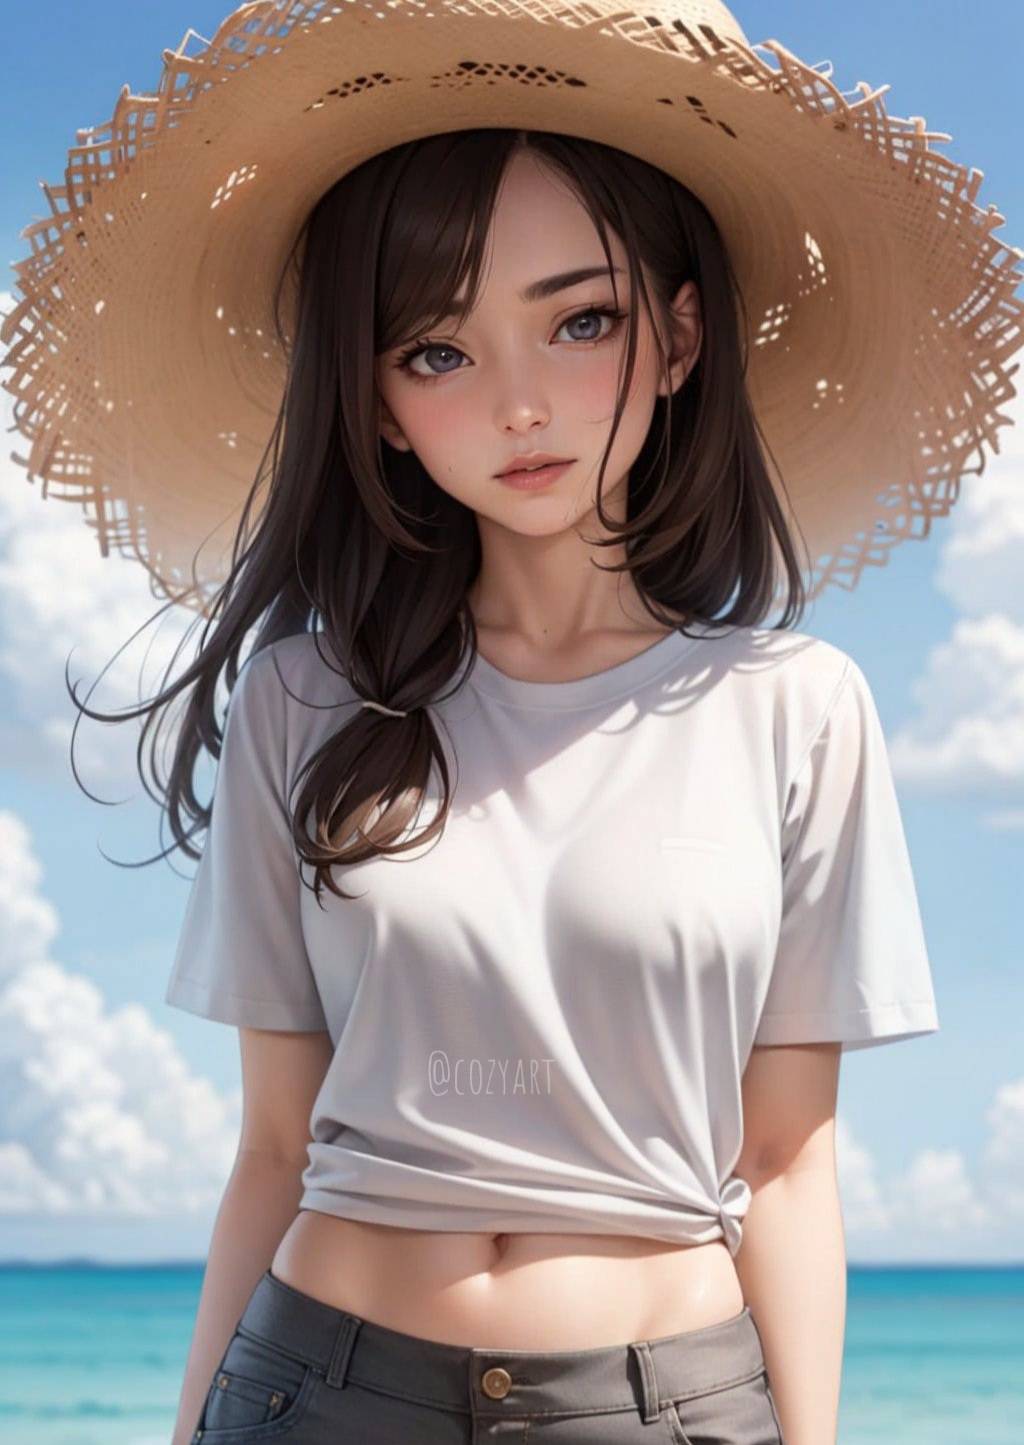 Premium AI Image  Anime Style kawaii girl in summertime